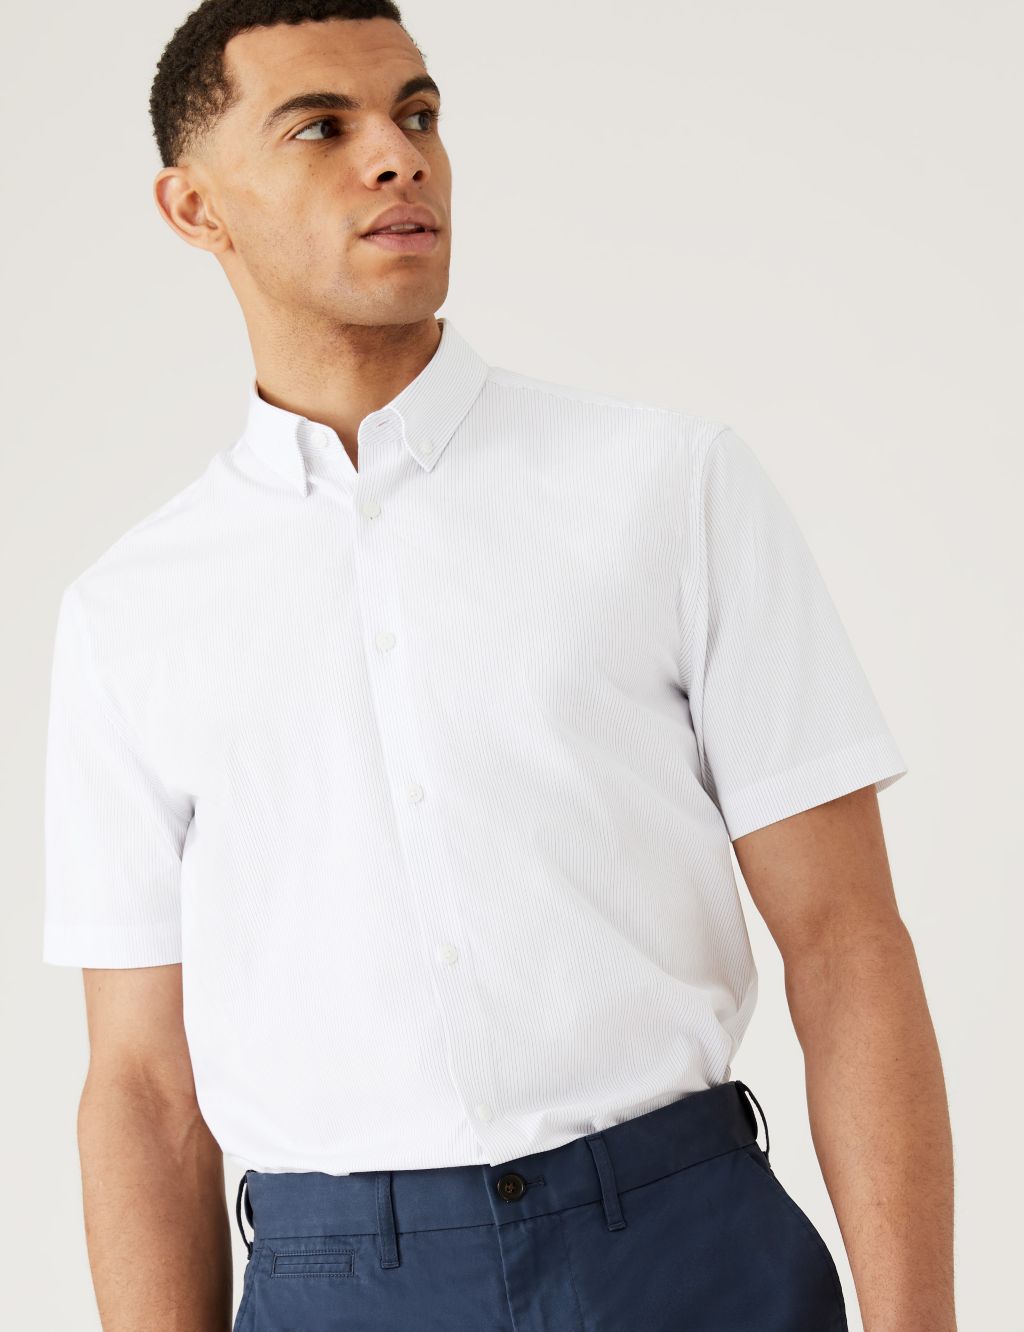 Regular Fit Cotton Rich Striped Shirt image 4